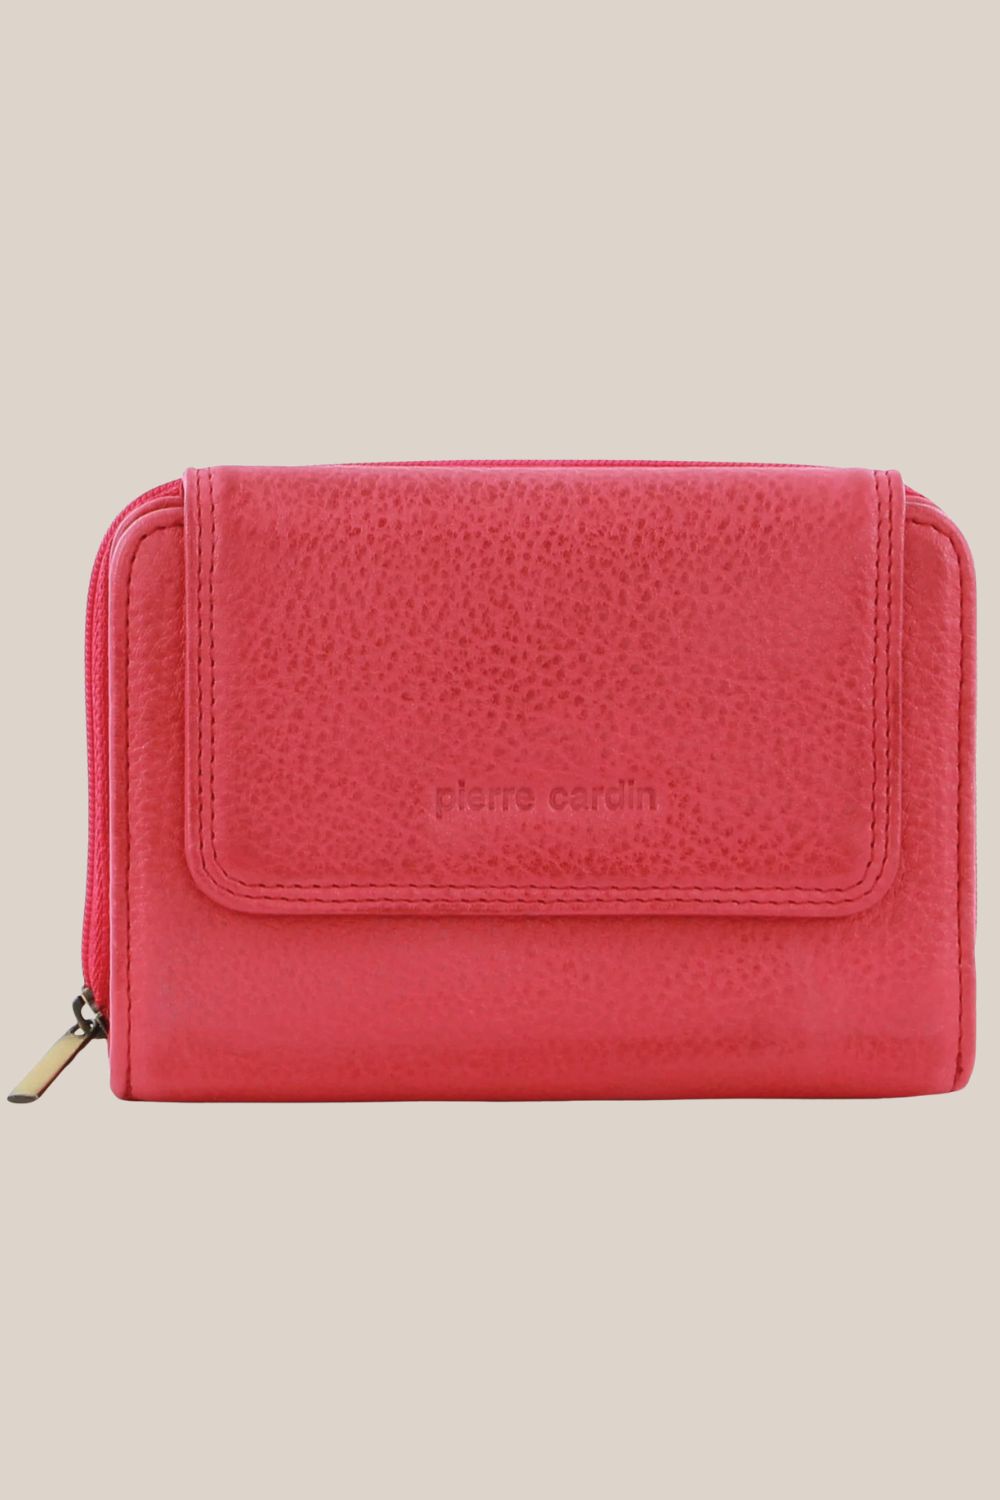 Pierre Cardin Ladies Leather Compact Bi Fold Wallet